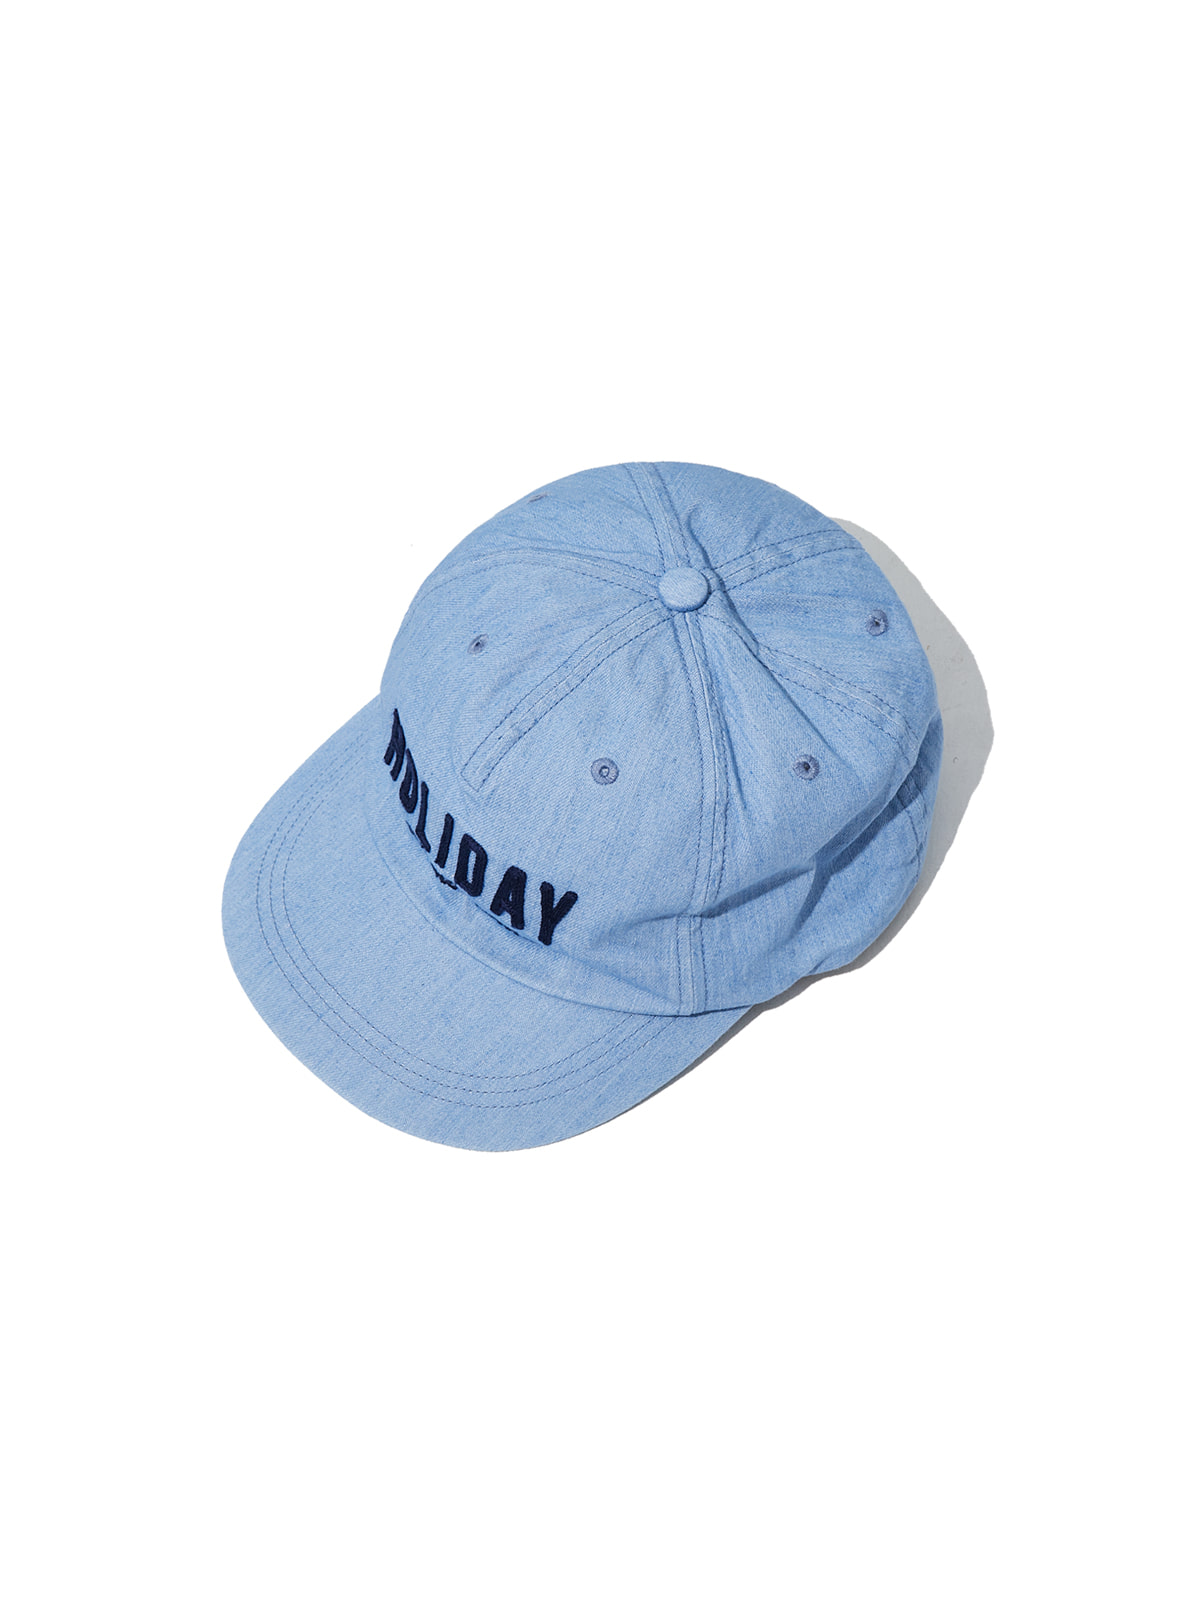 HOLIDAY CAP (SAX BLUE)